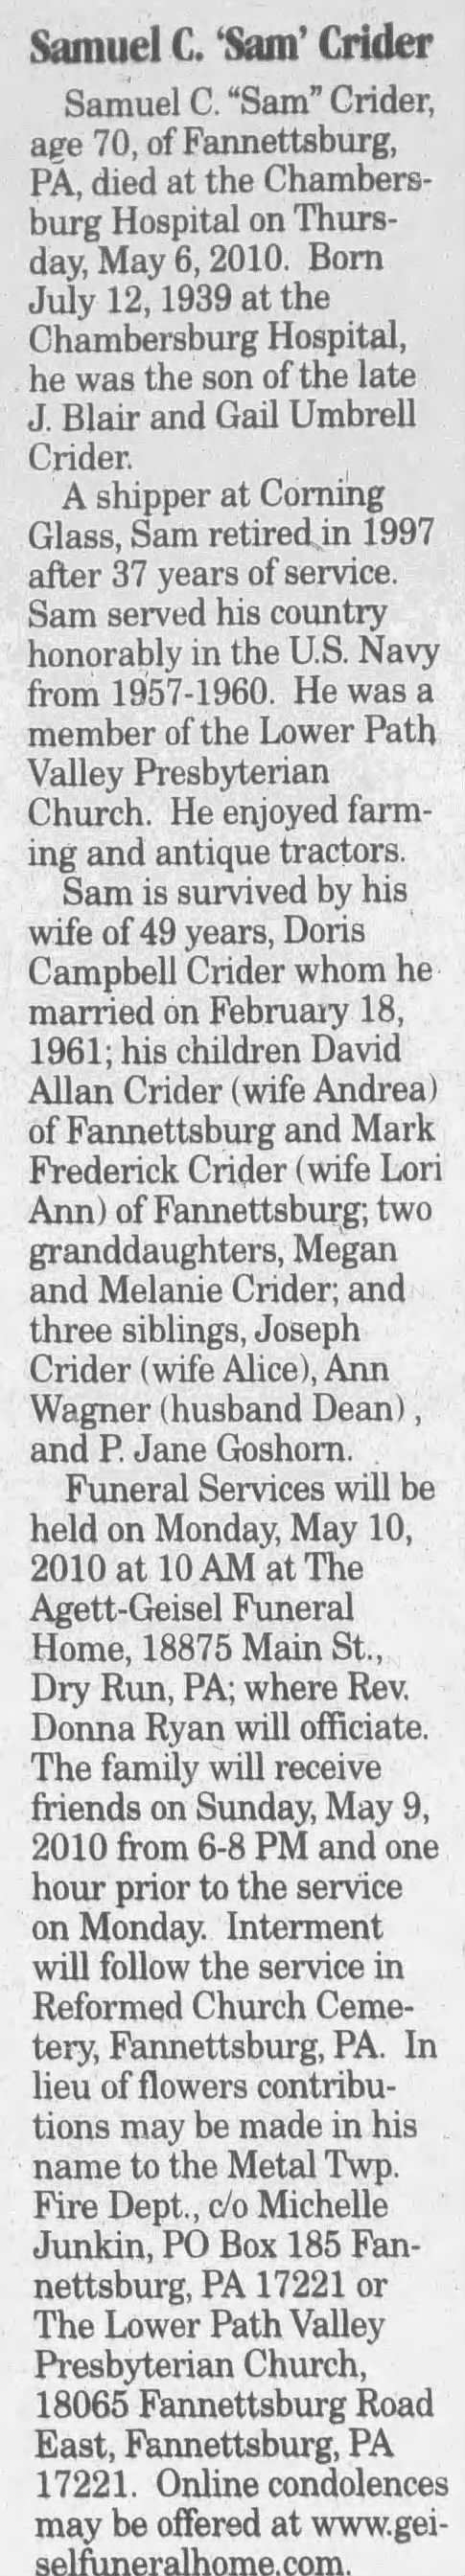 Obituary for Samuel C. Sam Crider, 1939-2010 (Aged 70)